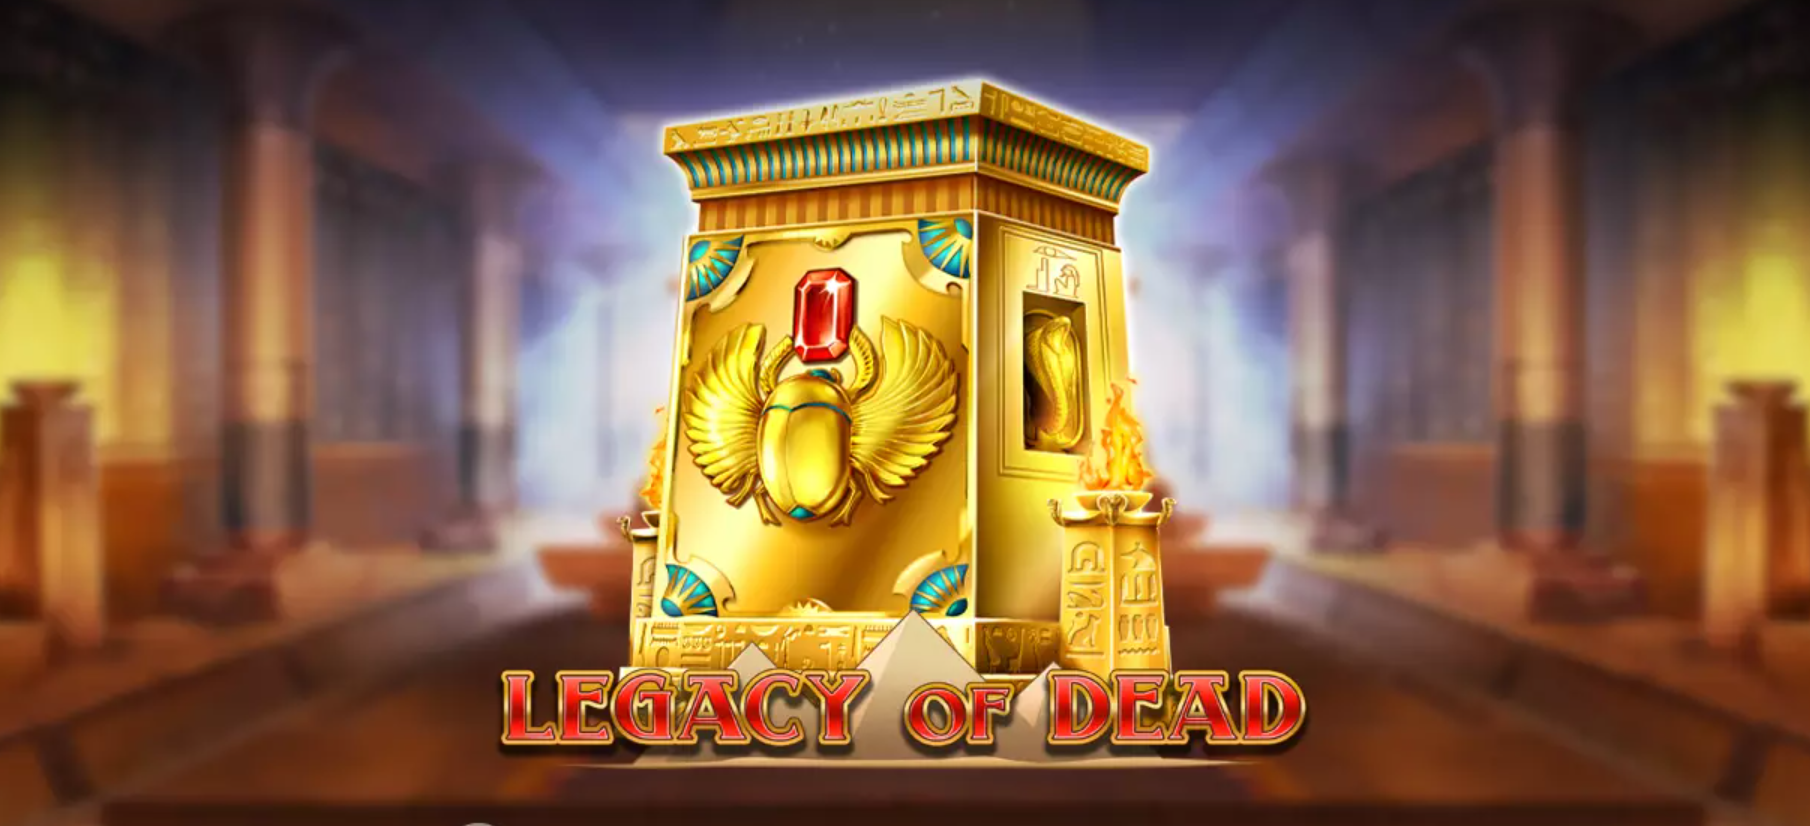 Legacy of dead slot logo